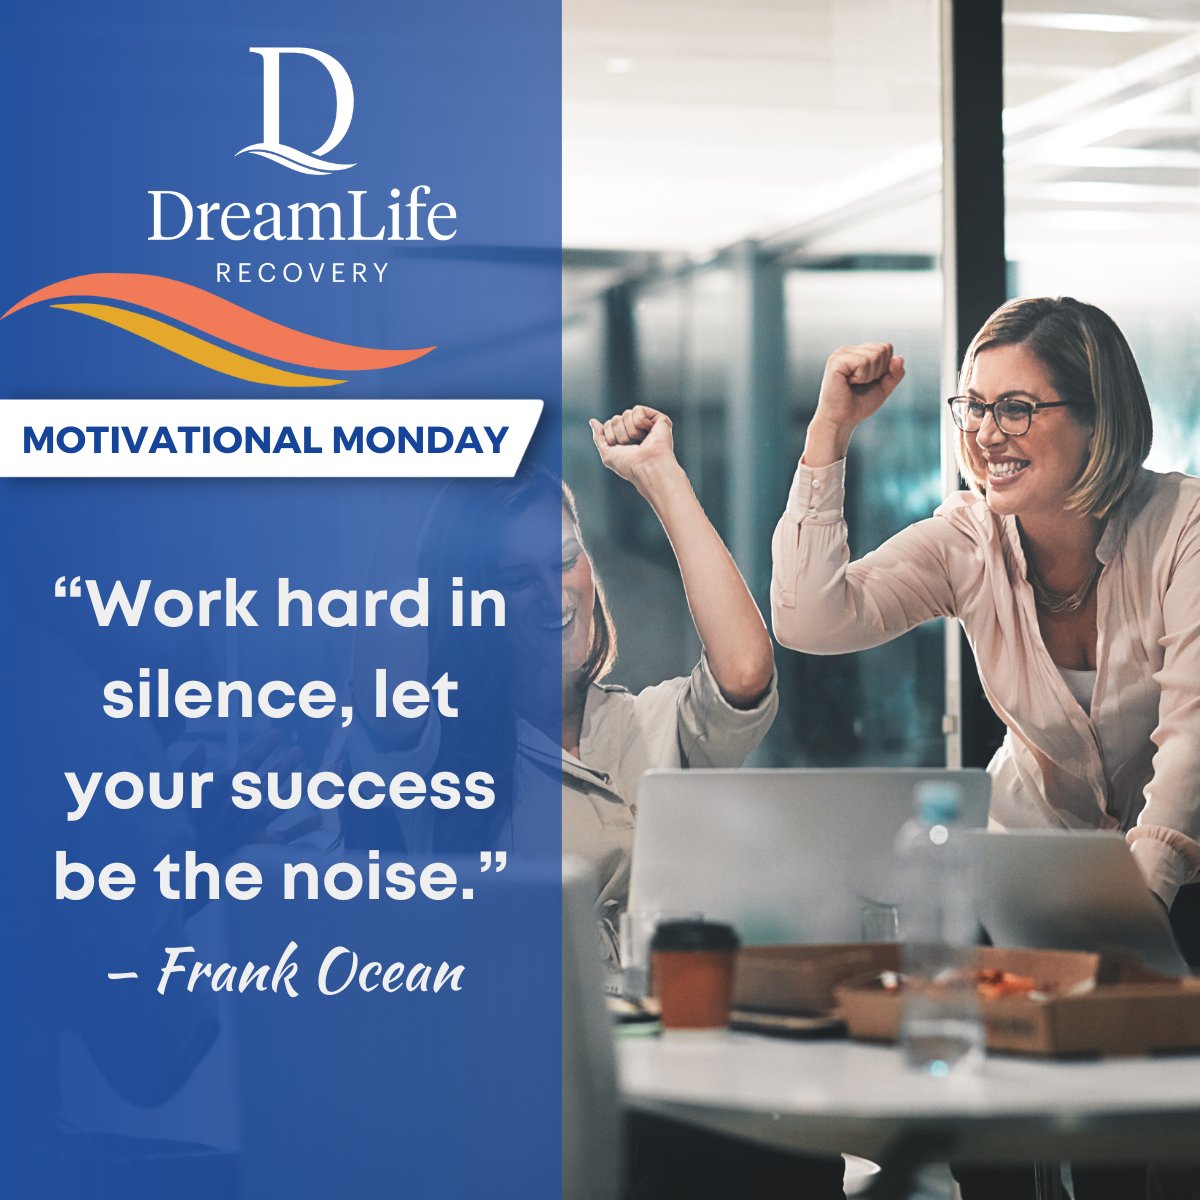 Happy Motivation Monday! 

Get Your Dream Life 
dreamliferecovery.com 
877-969-3157
#montivationmonday